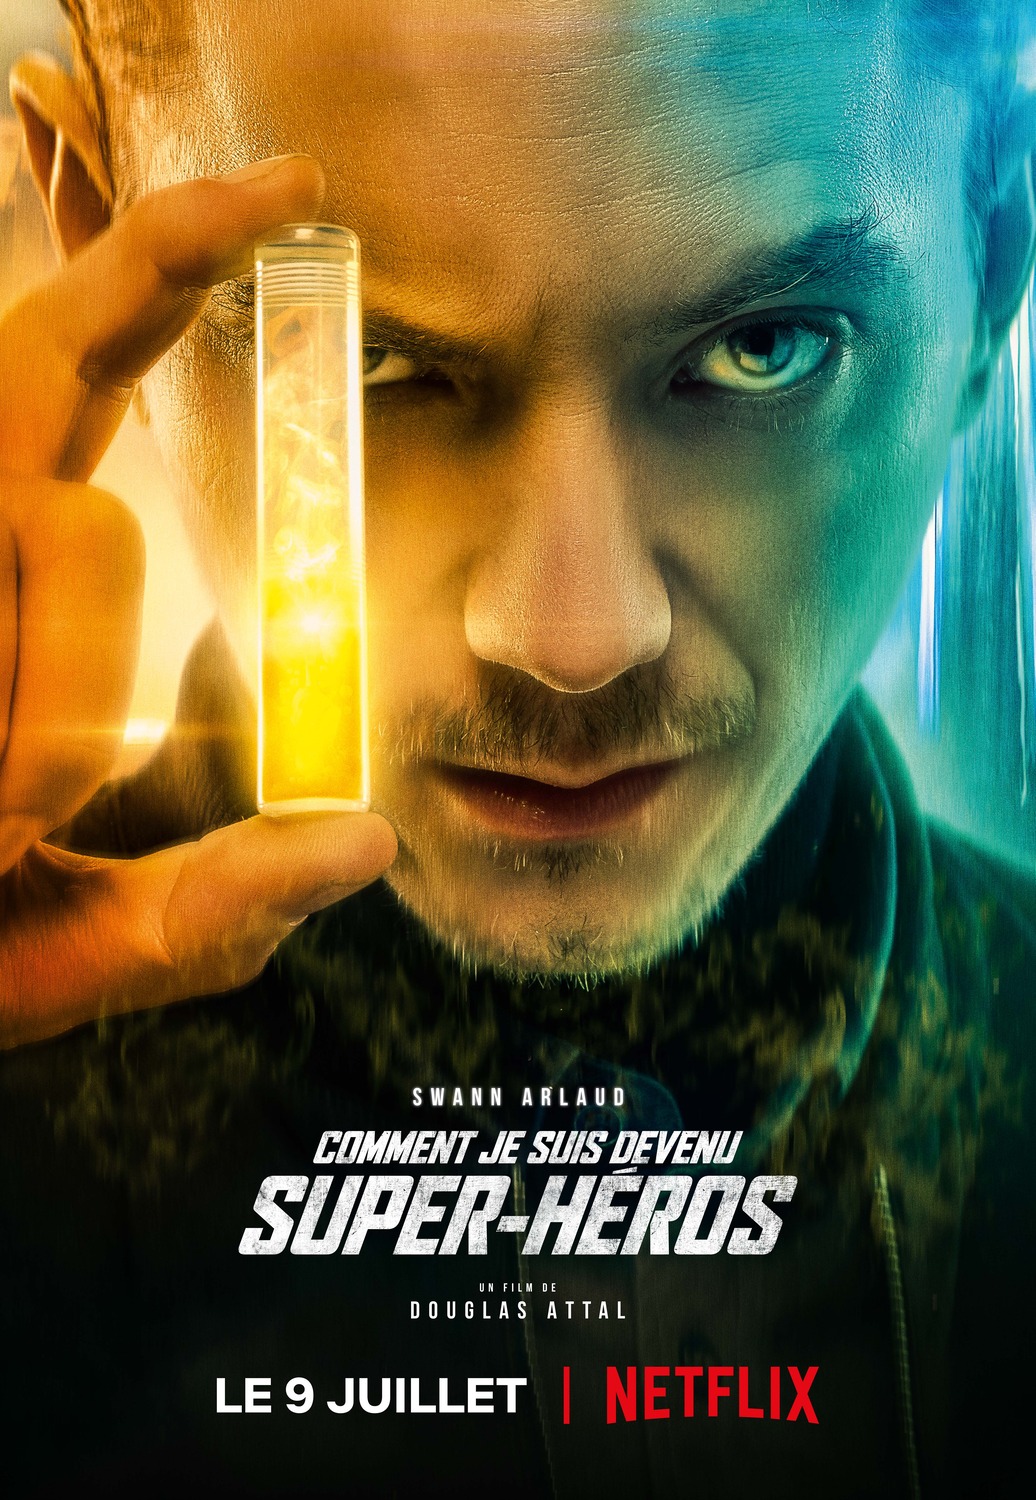 Extra Large Movie Poster Image for Comment je suis devenu super-héros (#11 of 12)